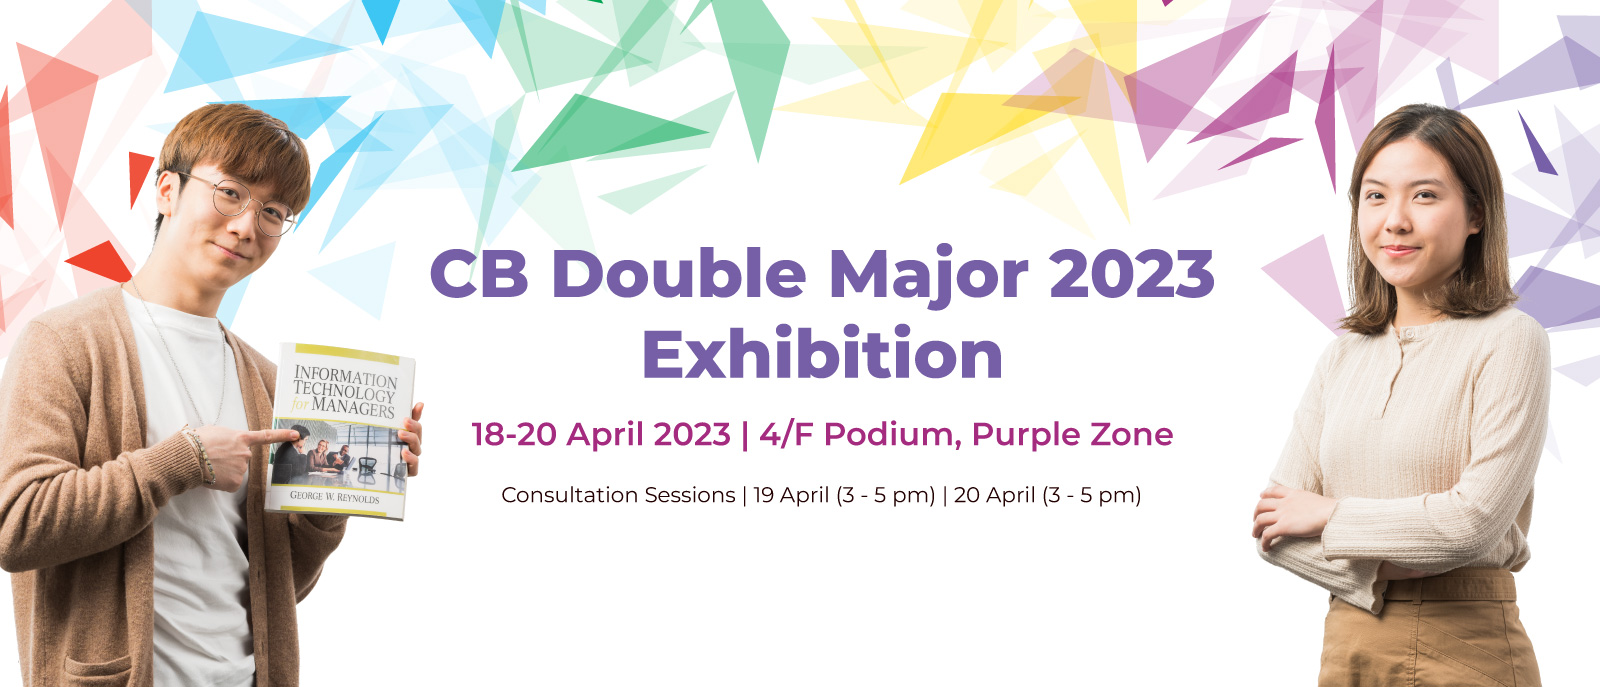 CB Double Major 2023 Exhibition